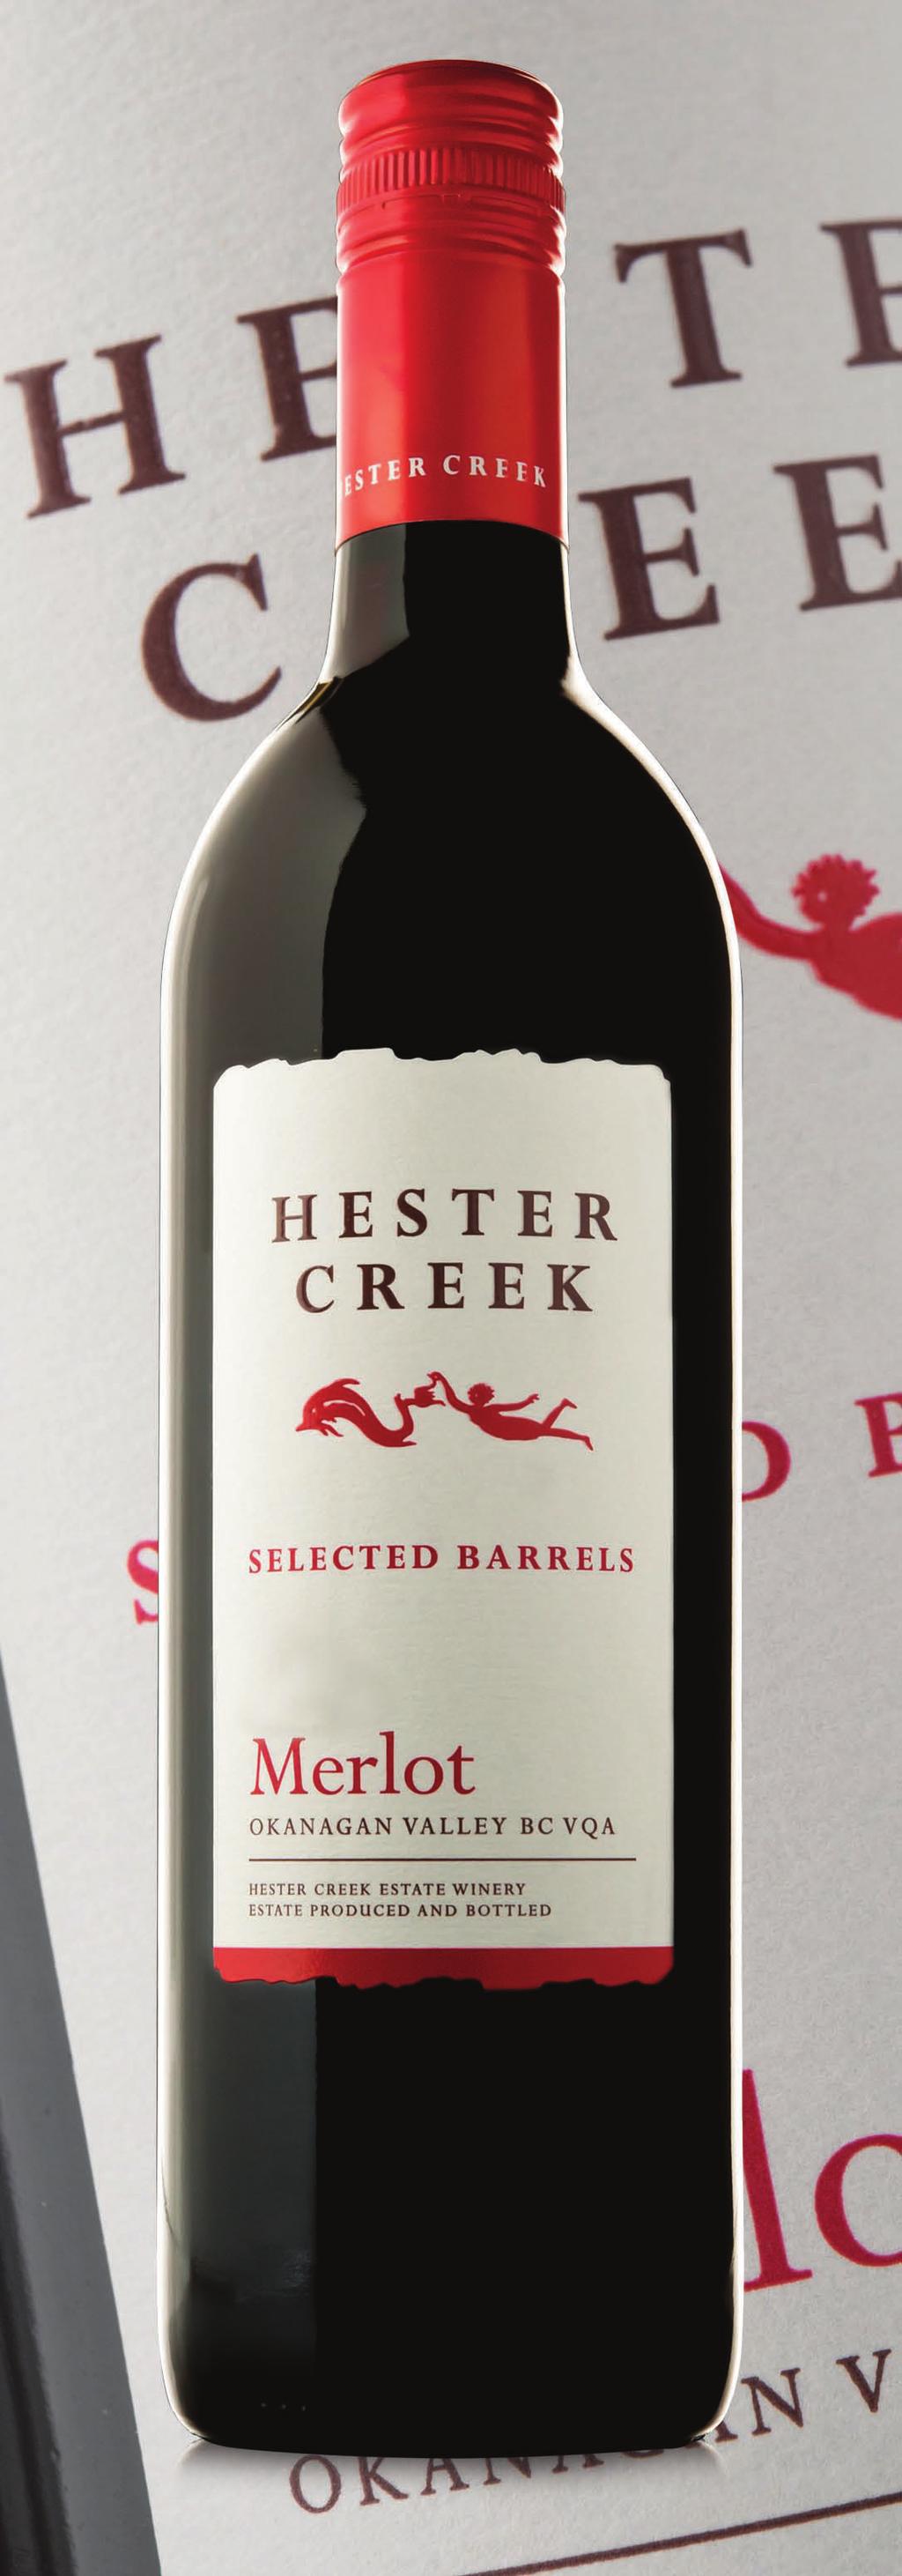 Hester Creek Estate Winery PO Box 1605, Oliver, British Columbia 1.866.498.4435 info@hestercreek.com www.hestercreek.com Selected Barrels Merlot Price: $18.